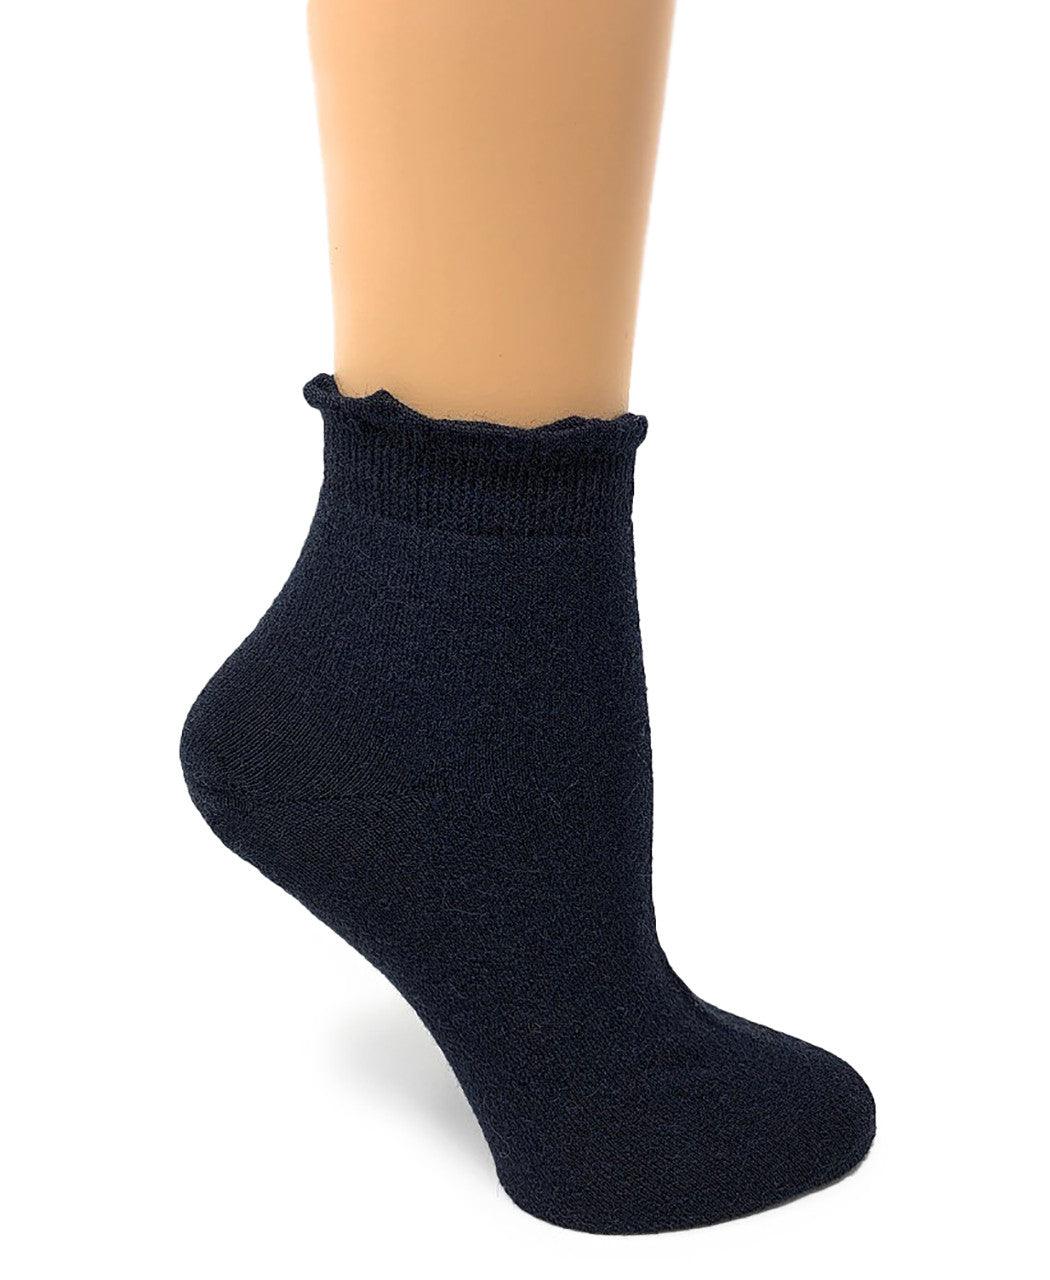 Street-style Jagged Edge Anklet Socks - Warrior Alpaca - The Sock Monster